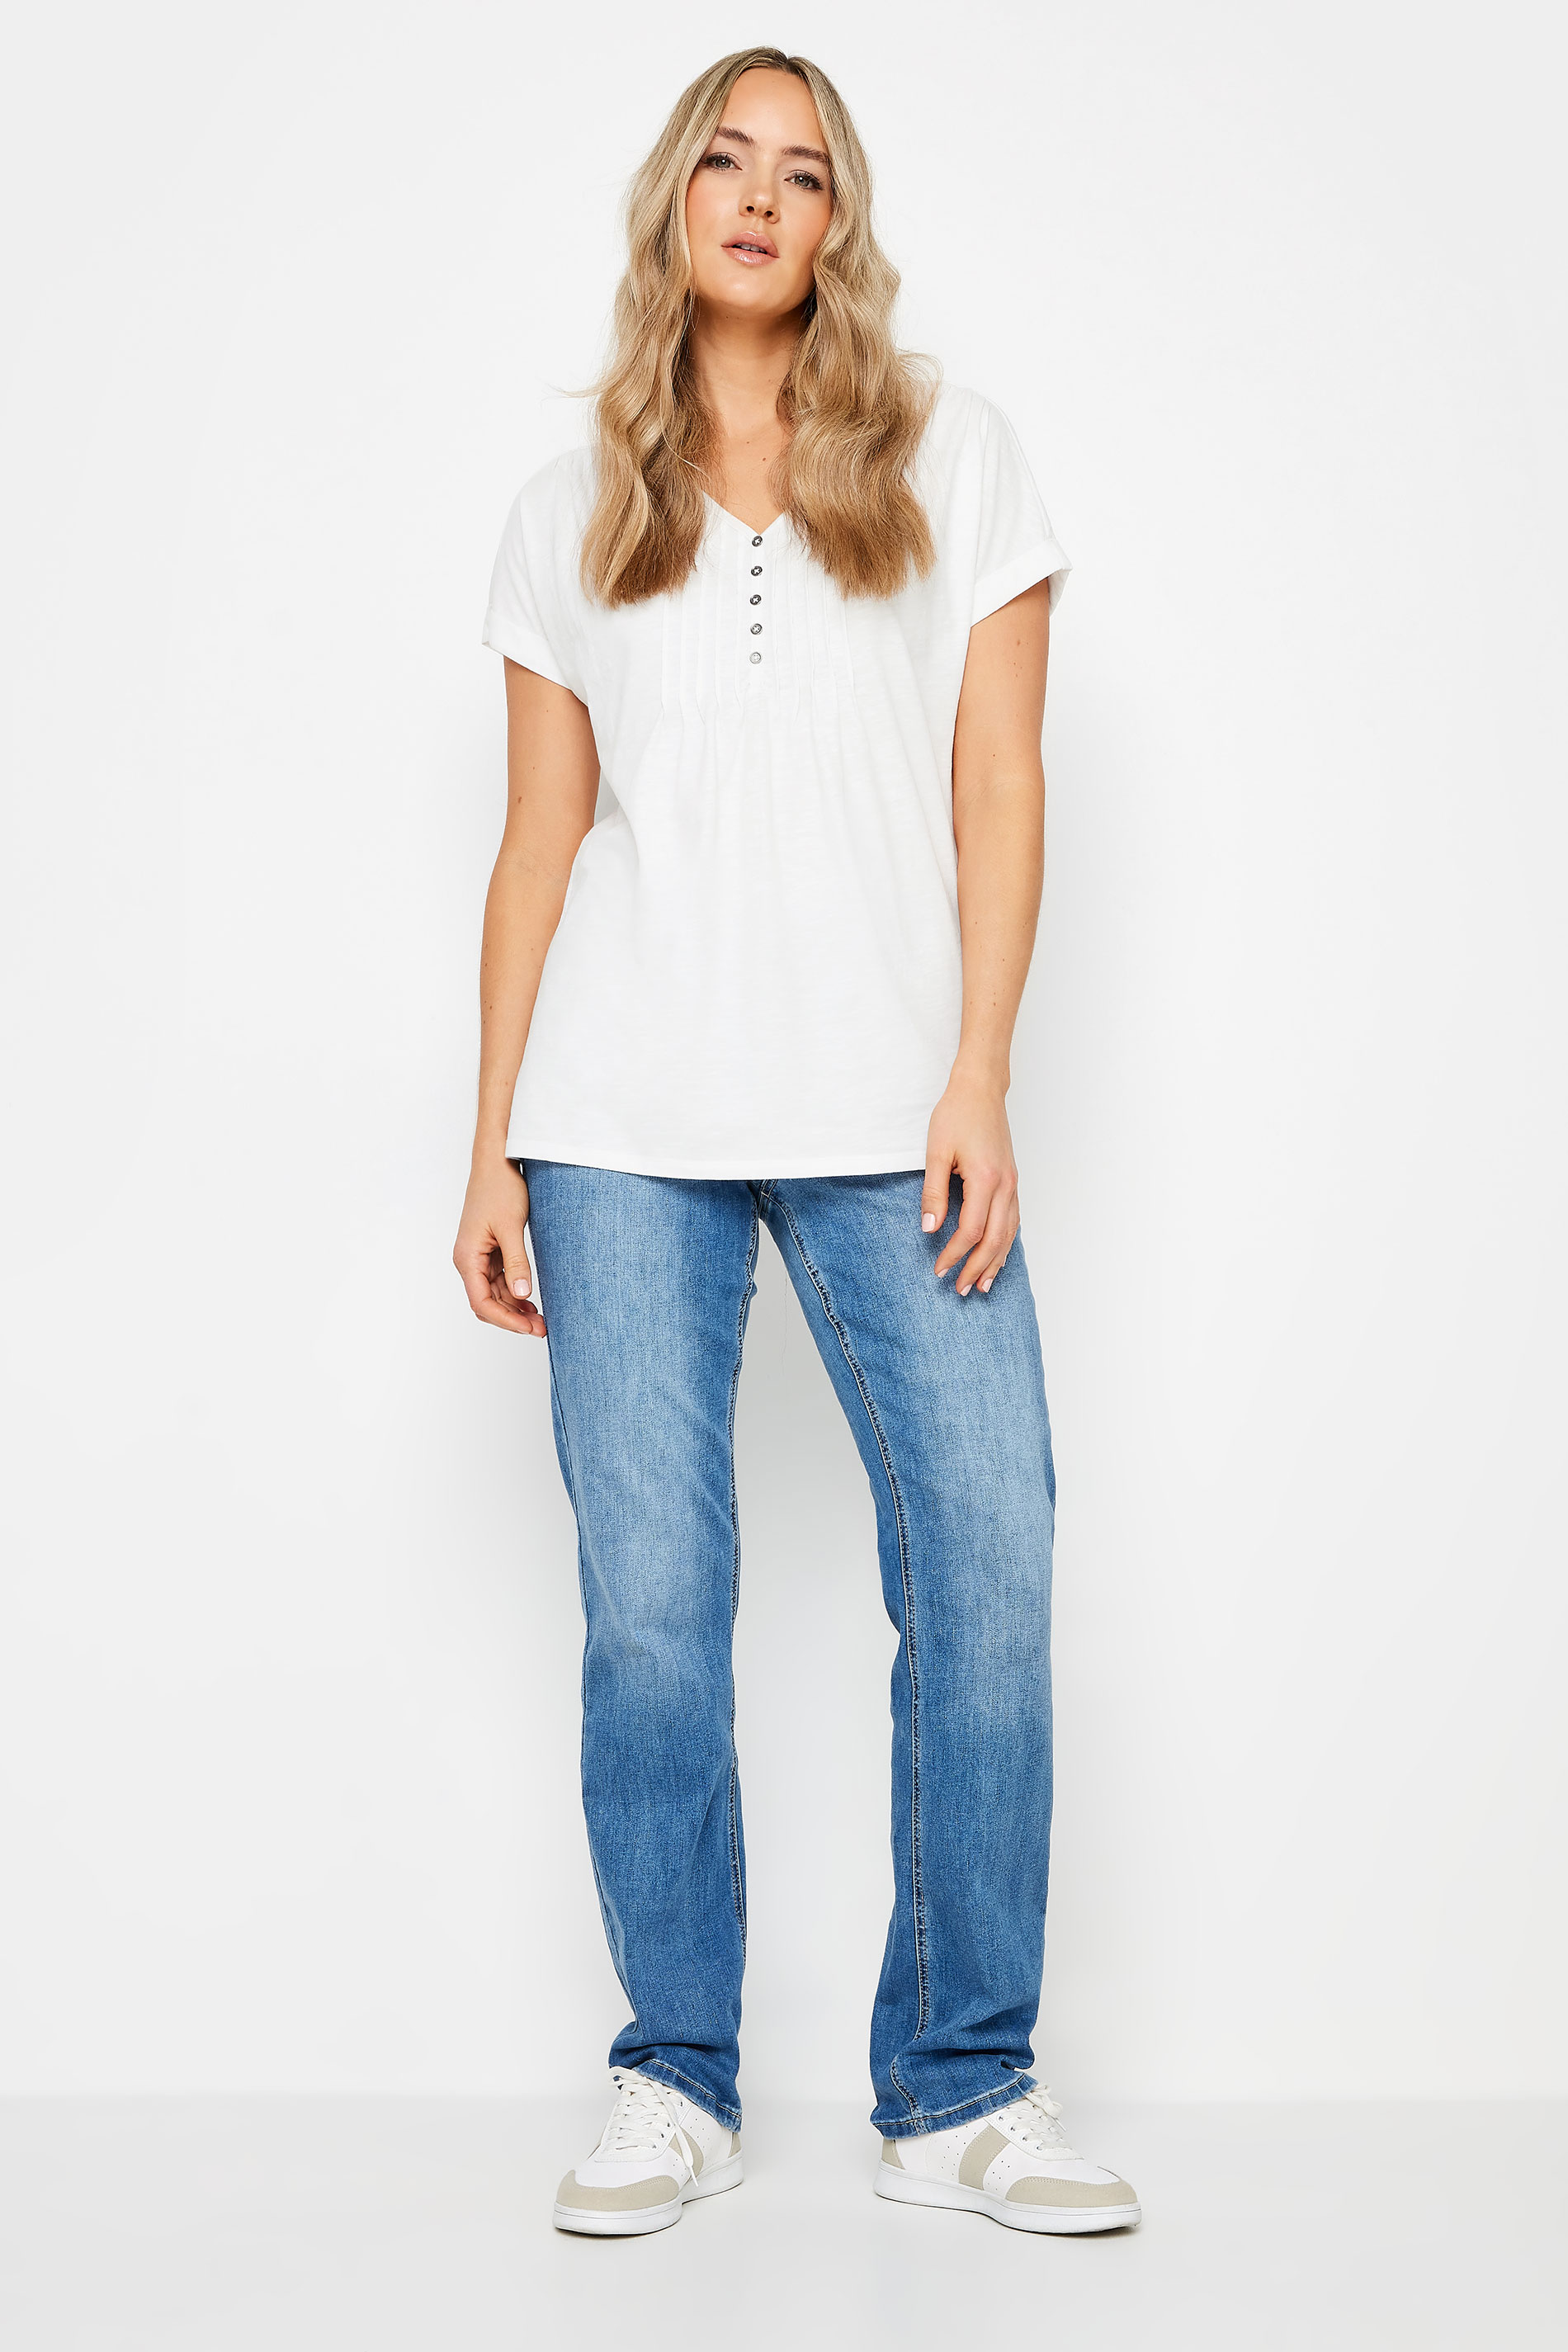 LTS Tall Women's Ivory White Cotton Henley T-Shirt | Long Tall Sally 2